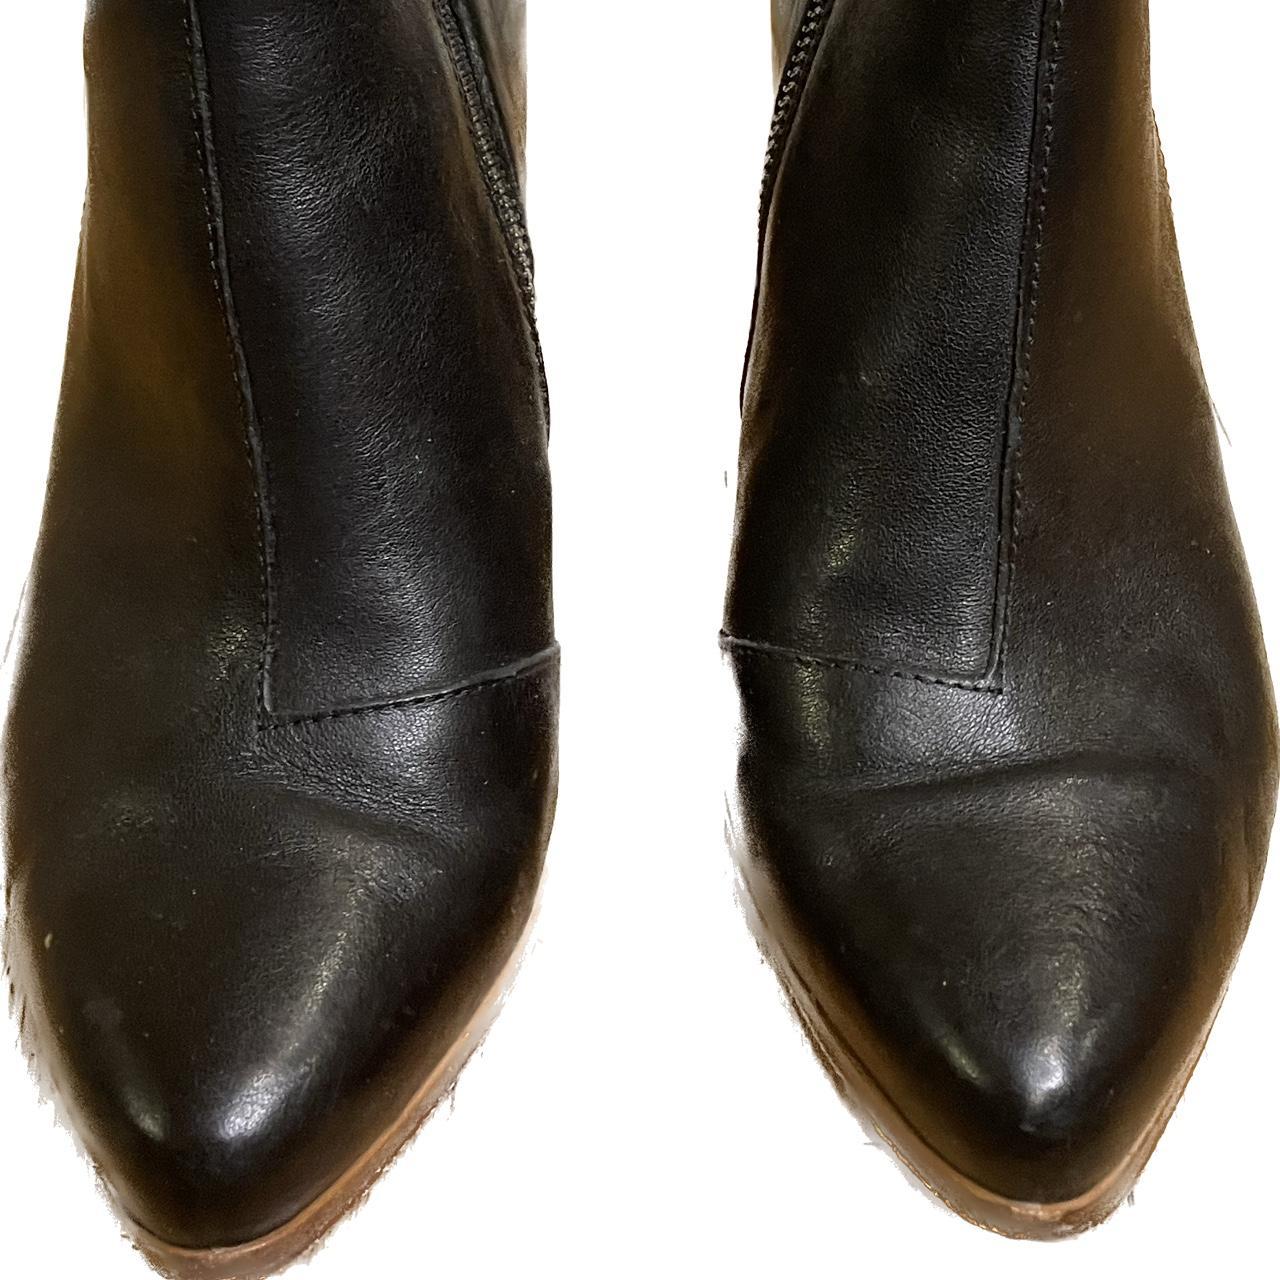 Eileen Fisher Women's Black Boots | Depop